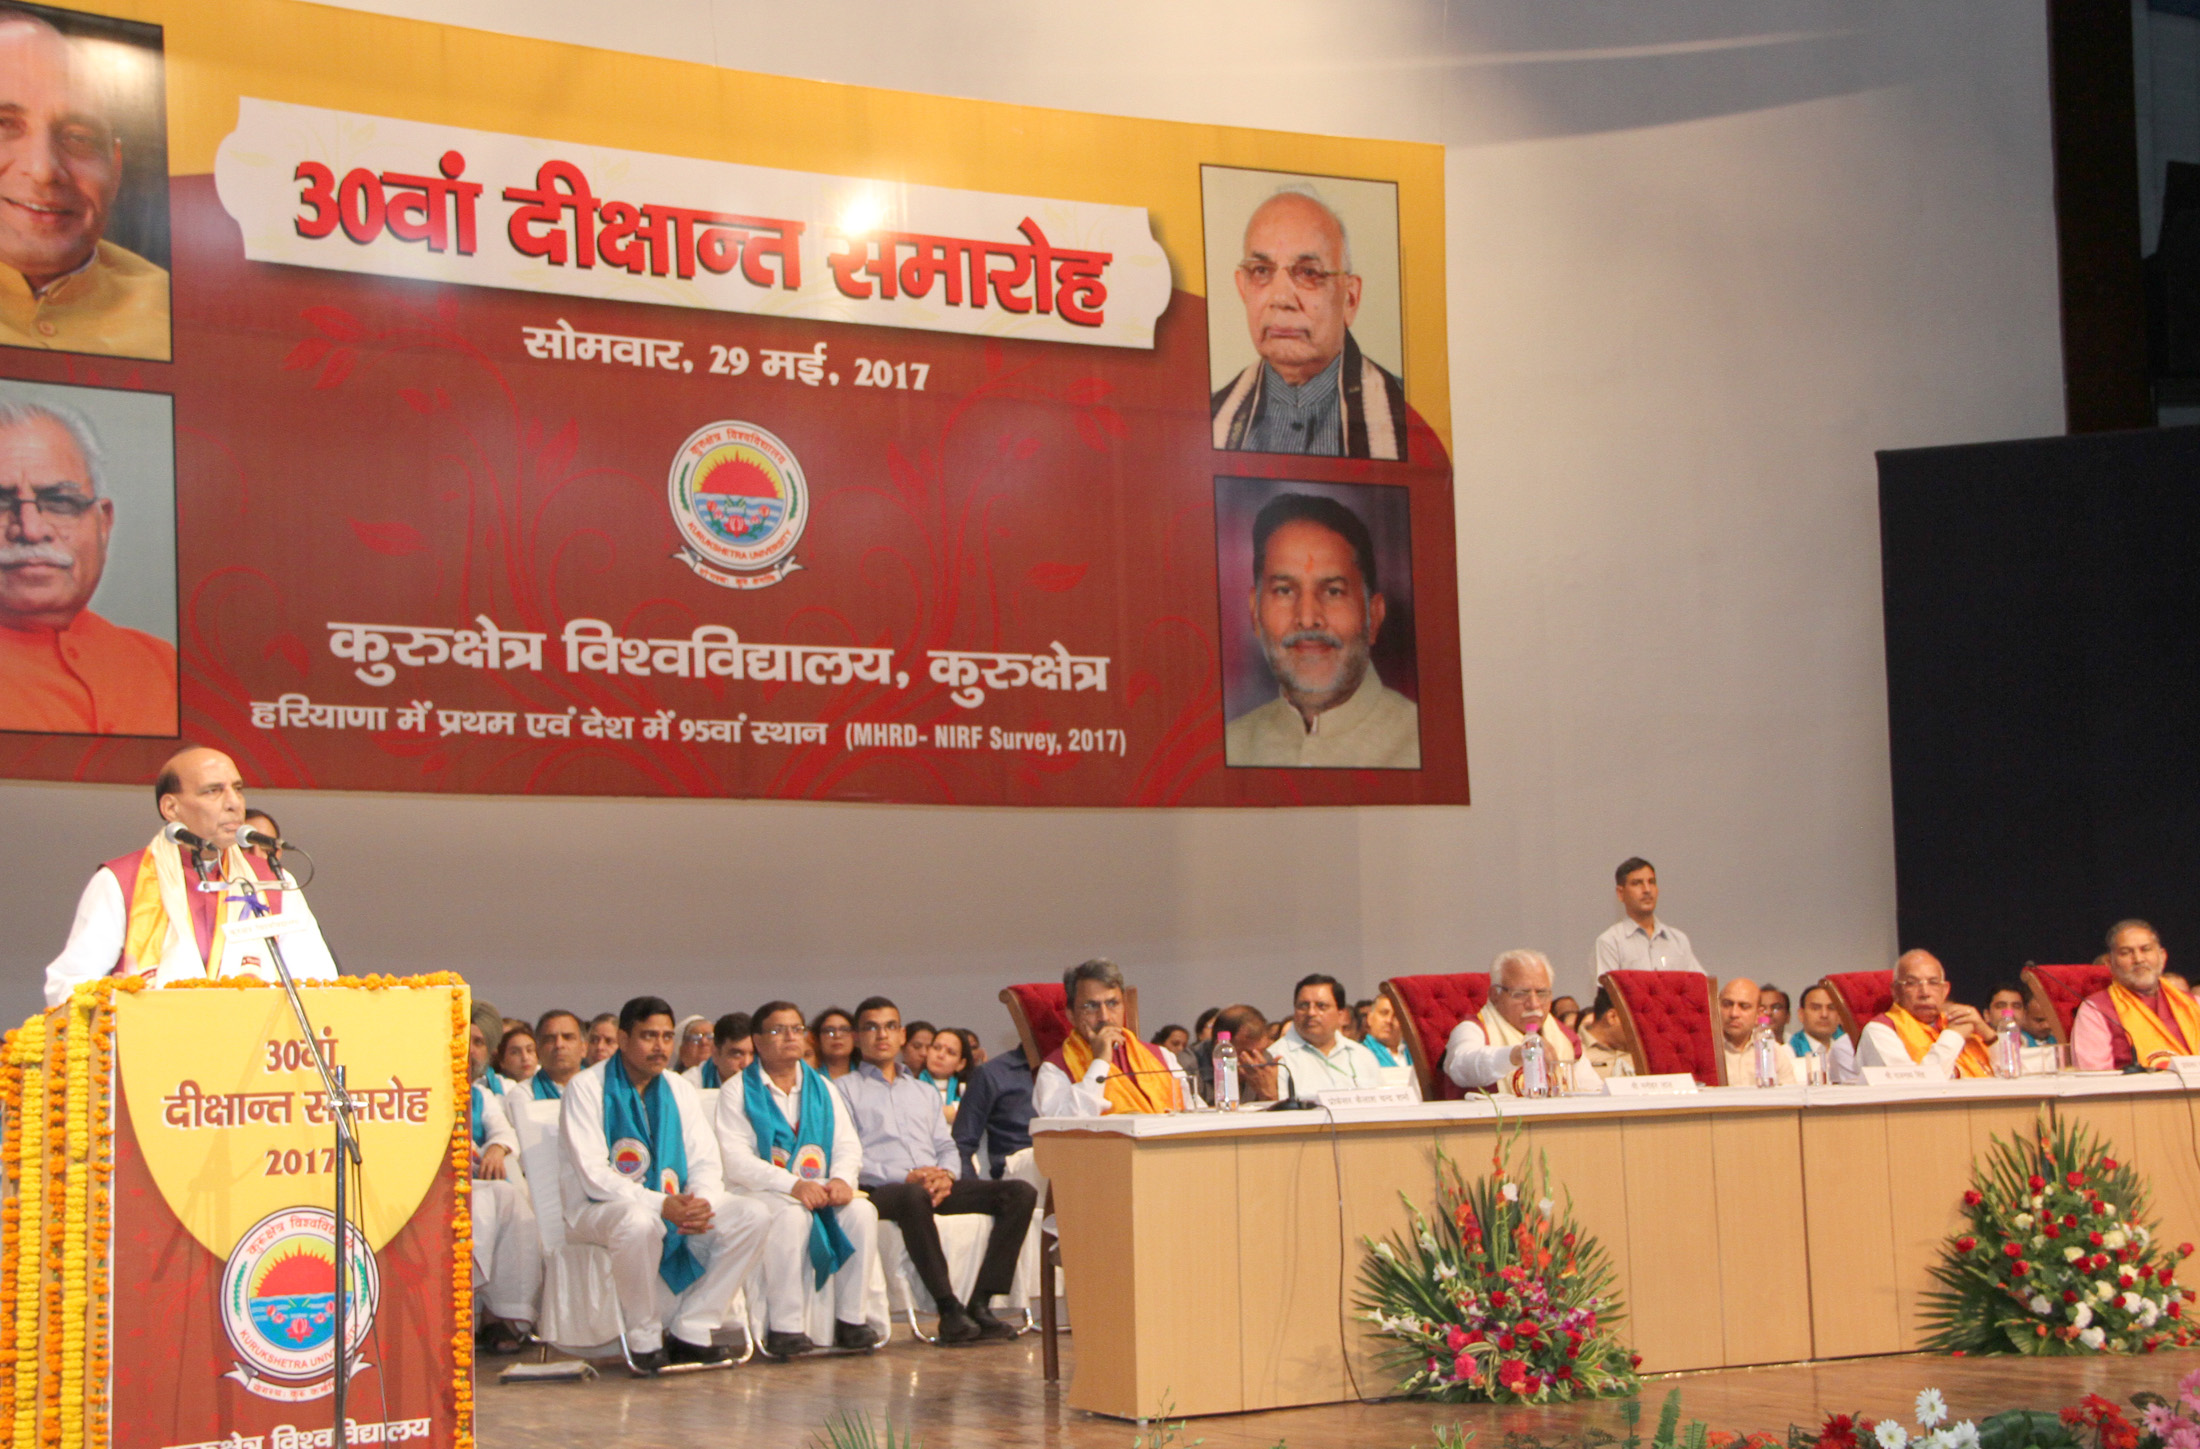 The Union Home Minister, Shri Rajnath Singh addressing at the 30th Convocation of Kurukshetra University, at Kurukshetra, Haryana on May 29, 2017. The Governor of Haryana, Prof. Kaptan Singh Solanki and the Chief Minister of Haryana, Shri Manohar Lal Khattar are also seen.